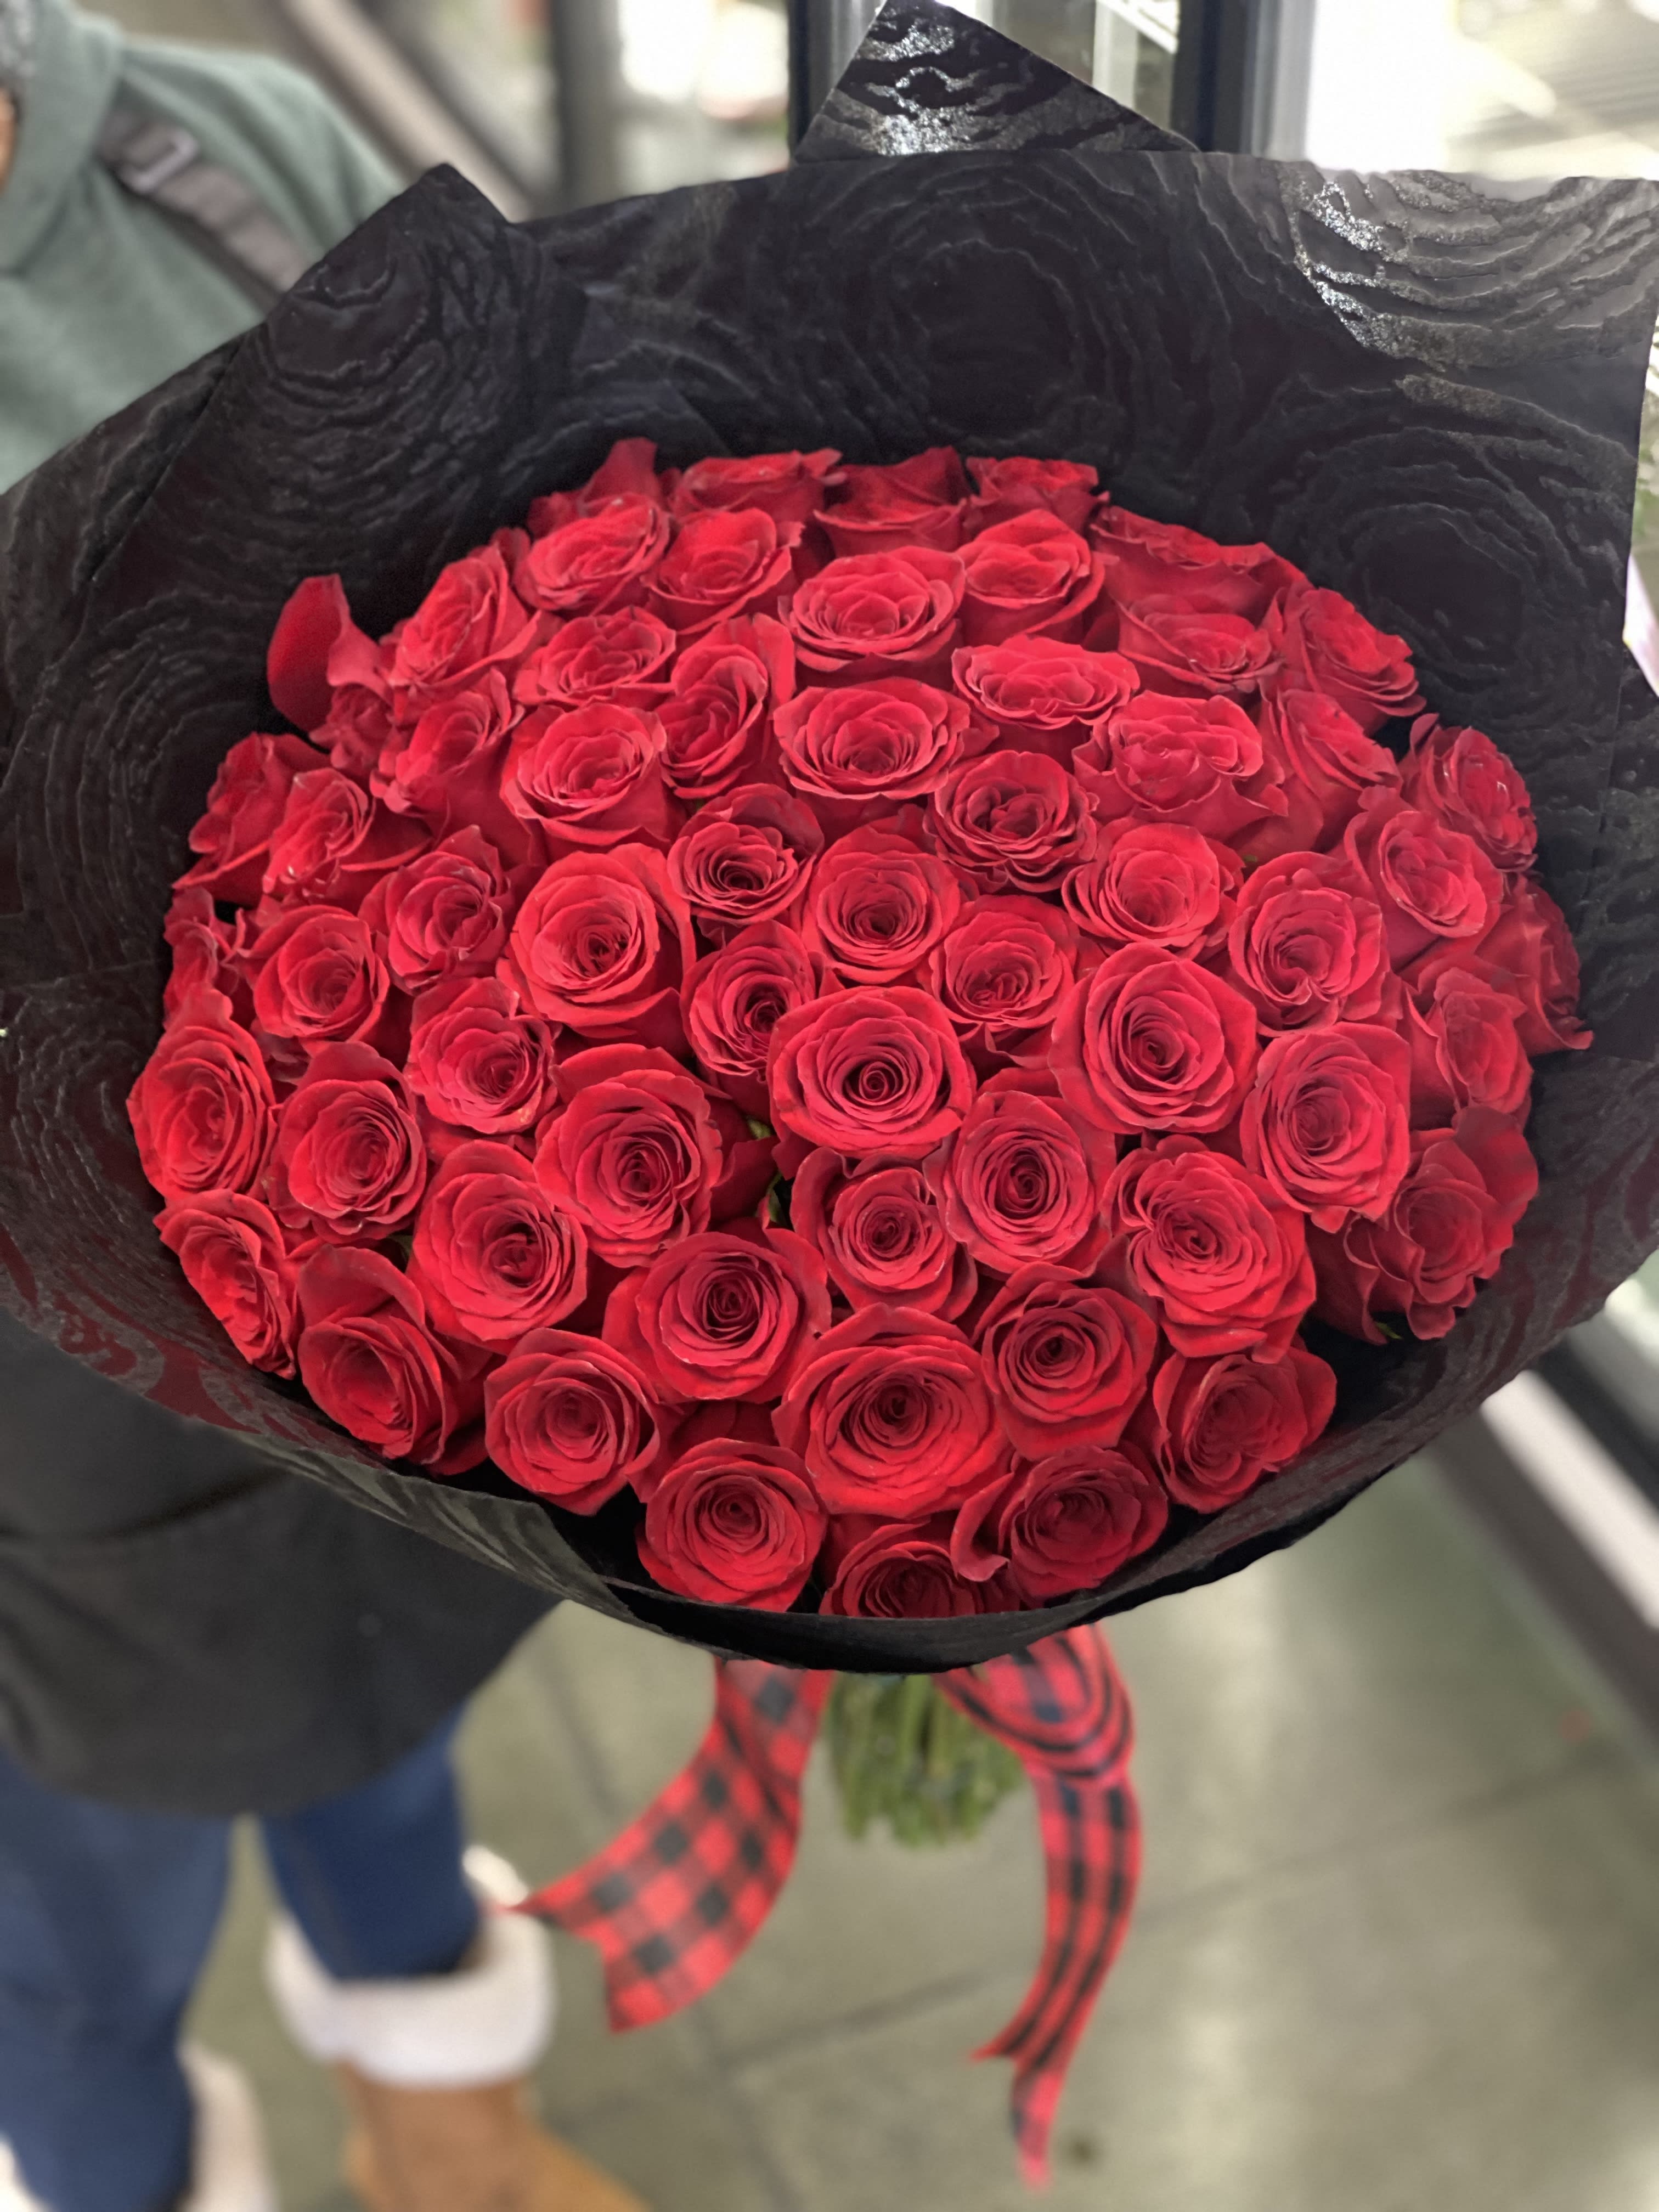 Large Pure Rose Bouquet